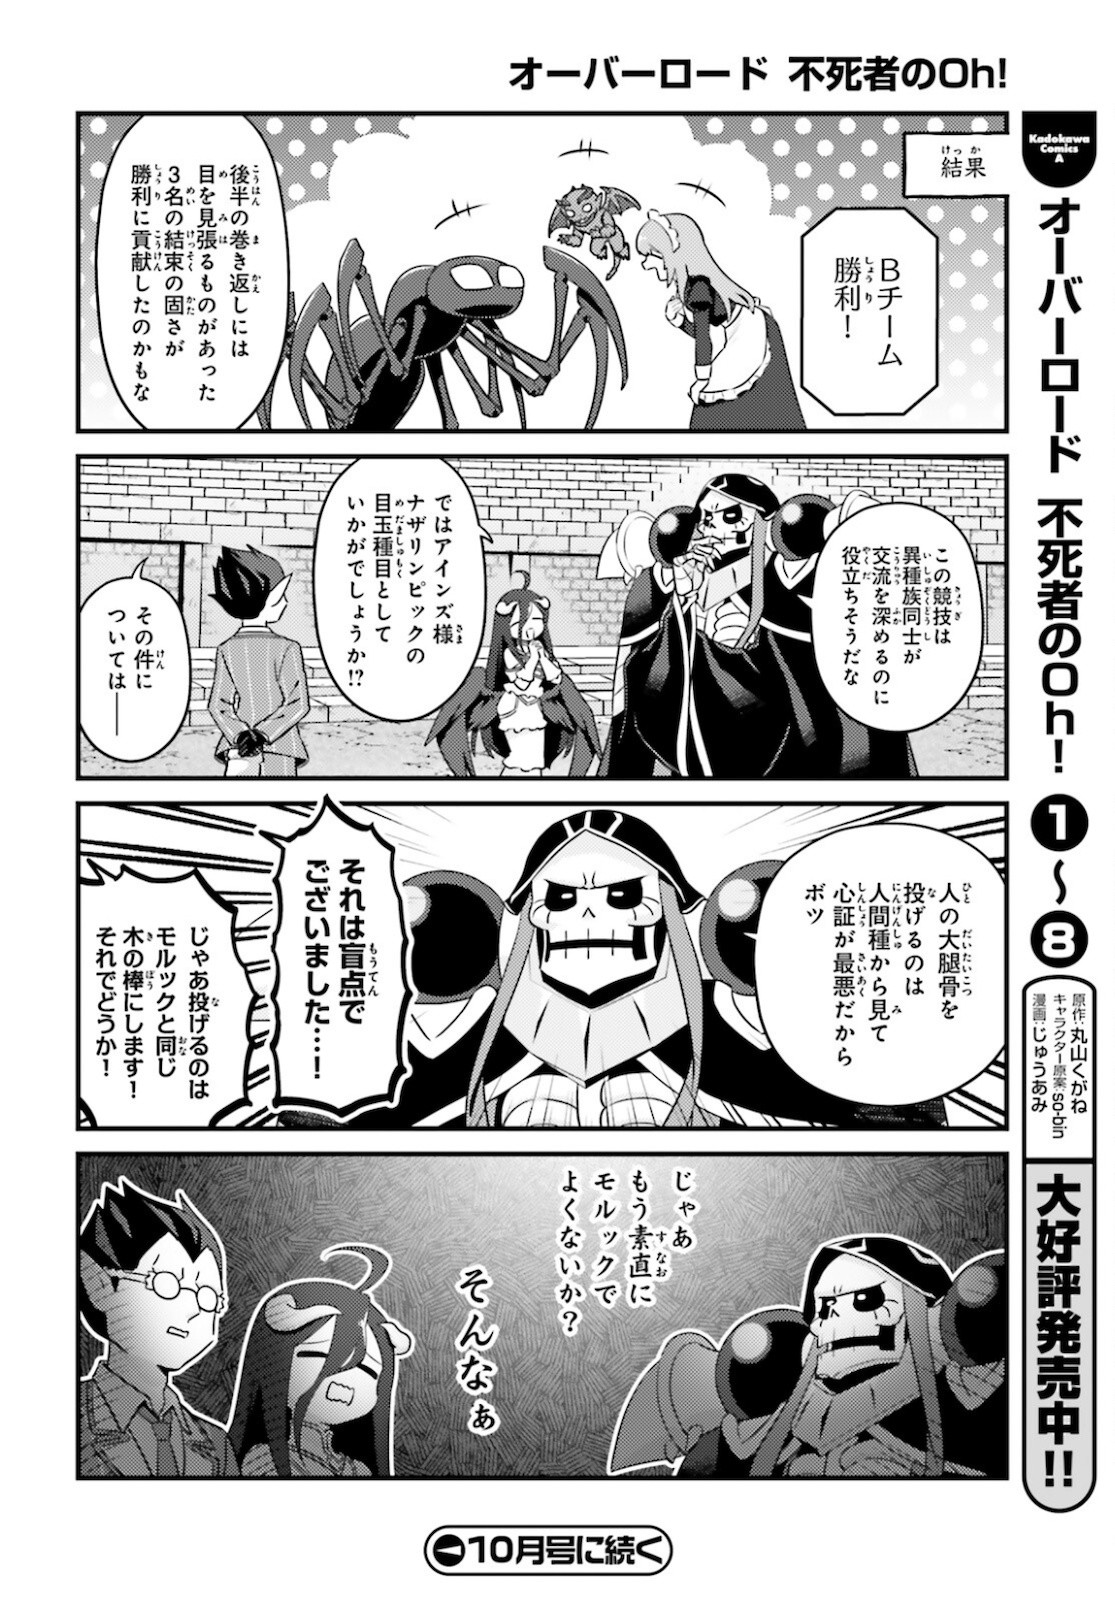 Overlord-Fushisha-no-Oh - Chapter 50 - Page 20